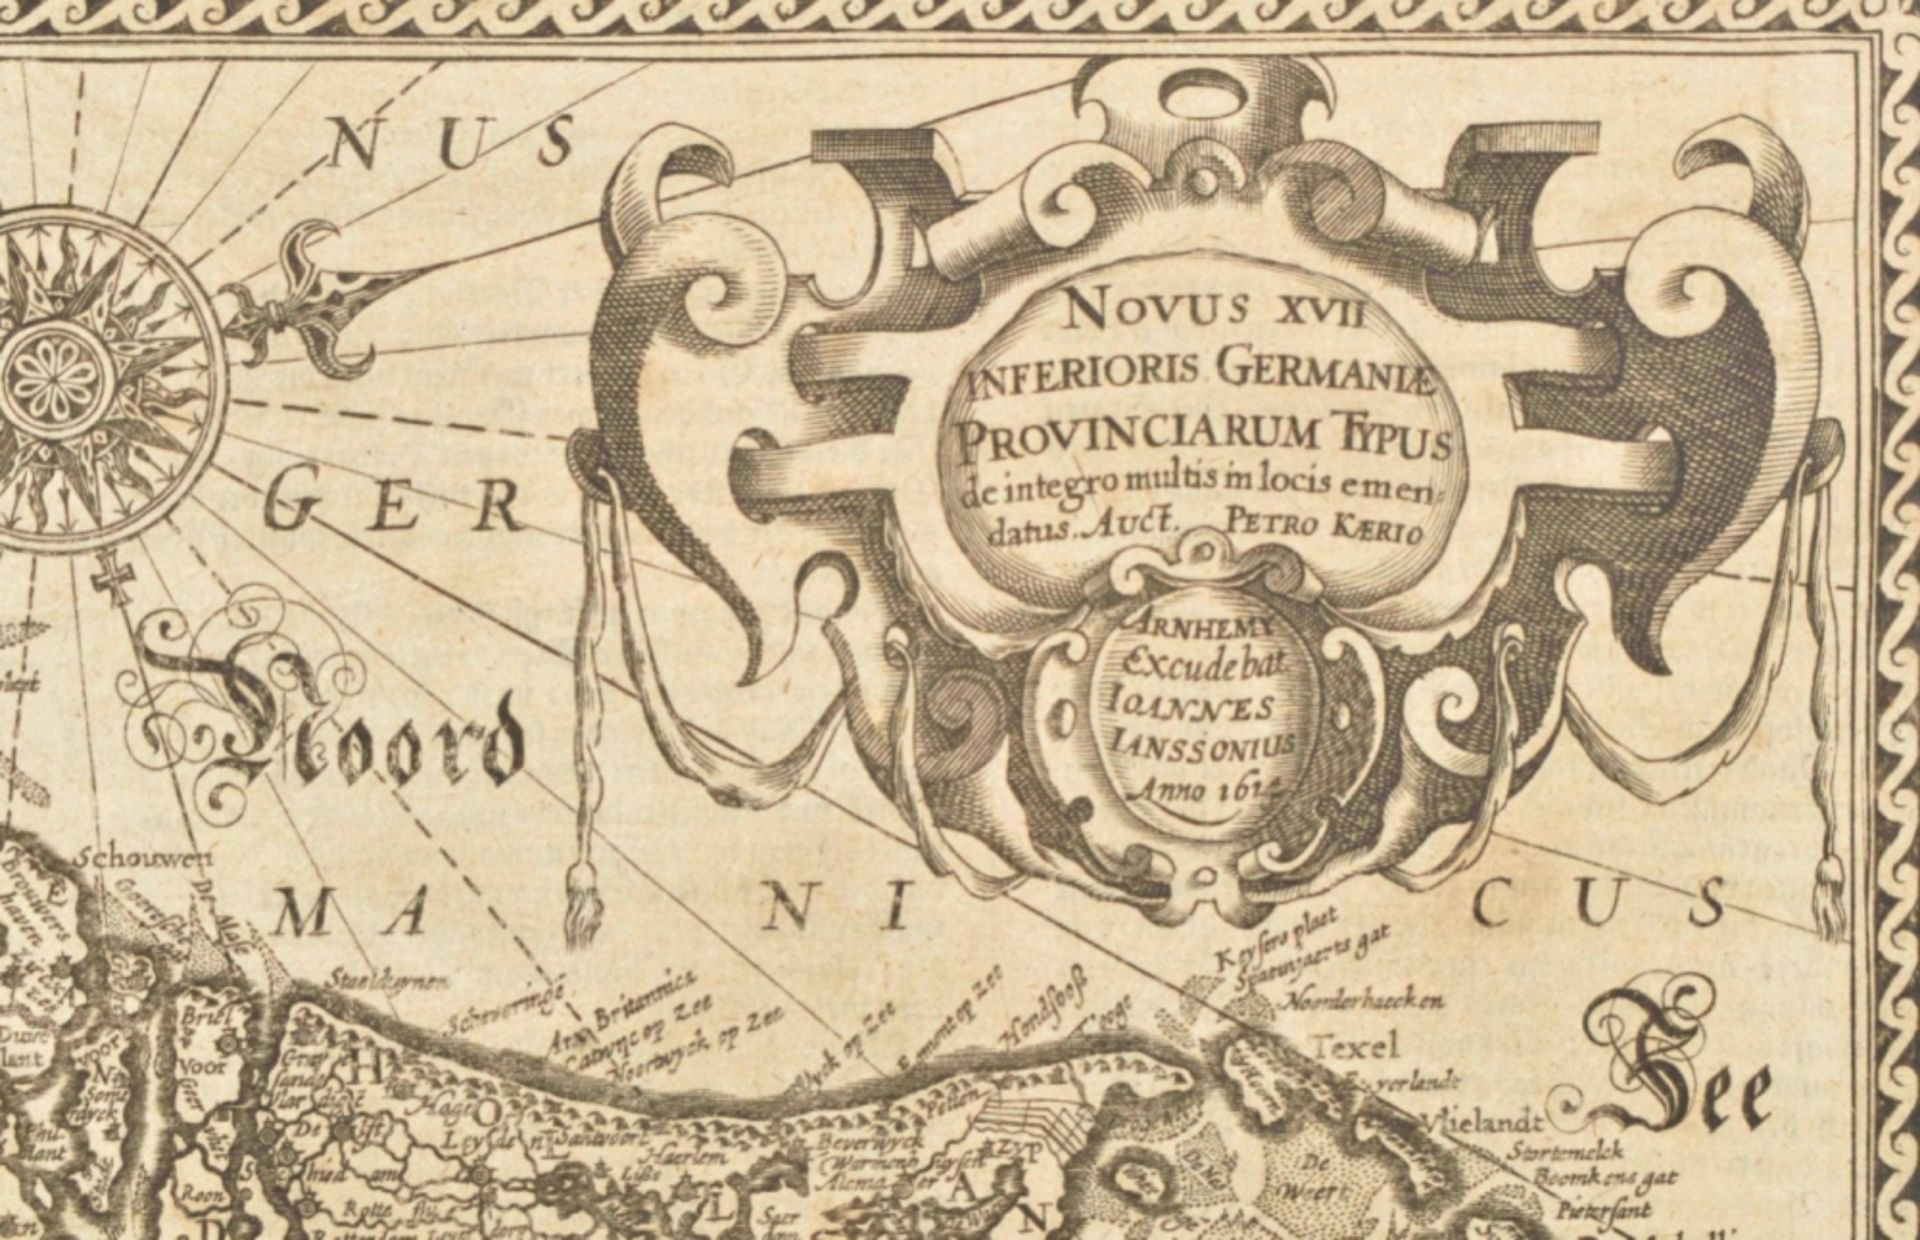 9 maps: Petrus Kaerius. Novus XVII Inferioris Germaniae - Image 8 of 10